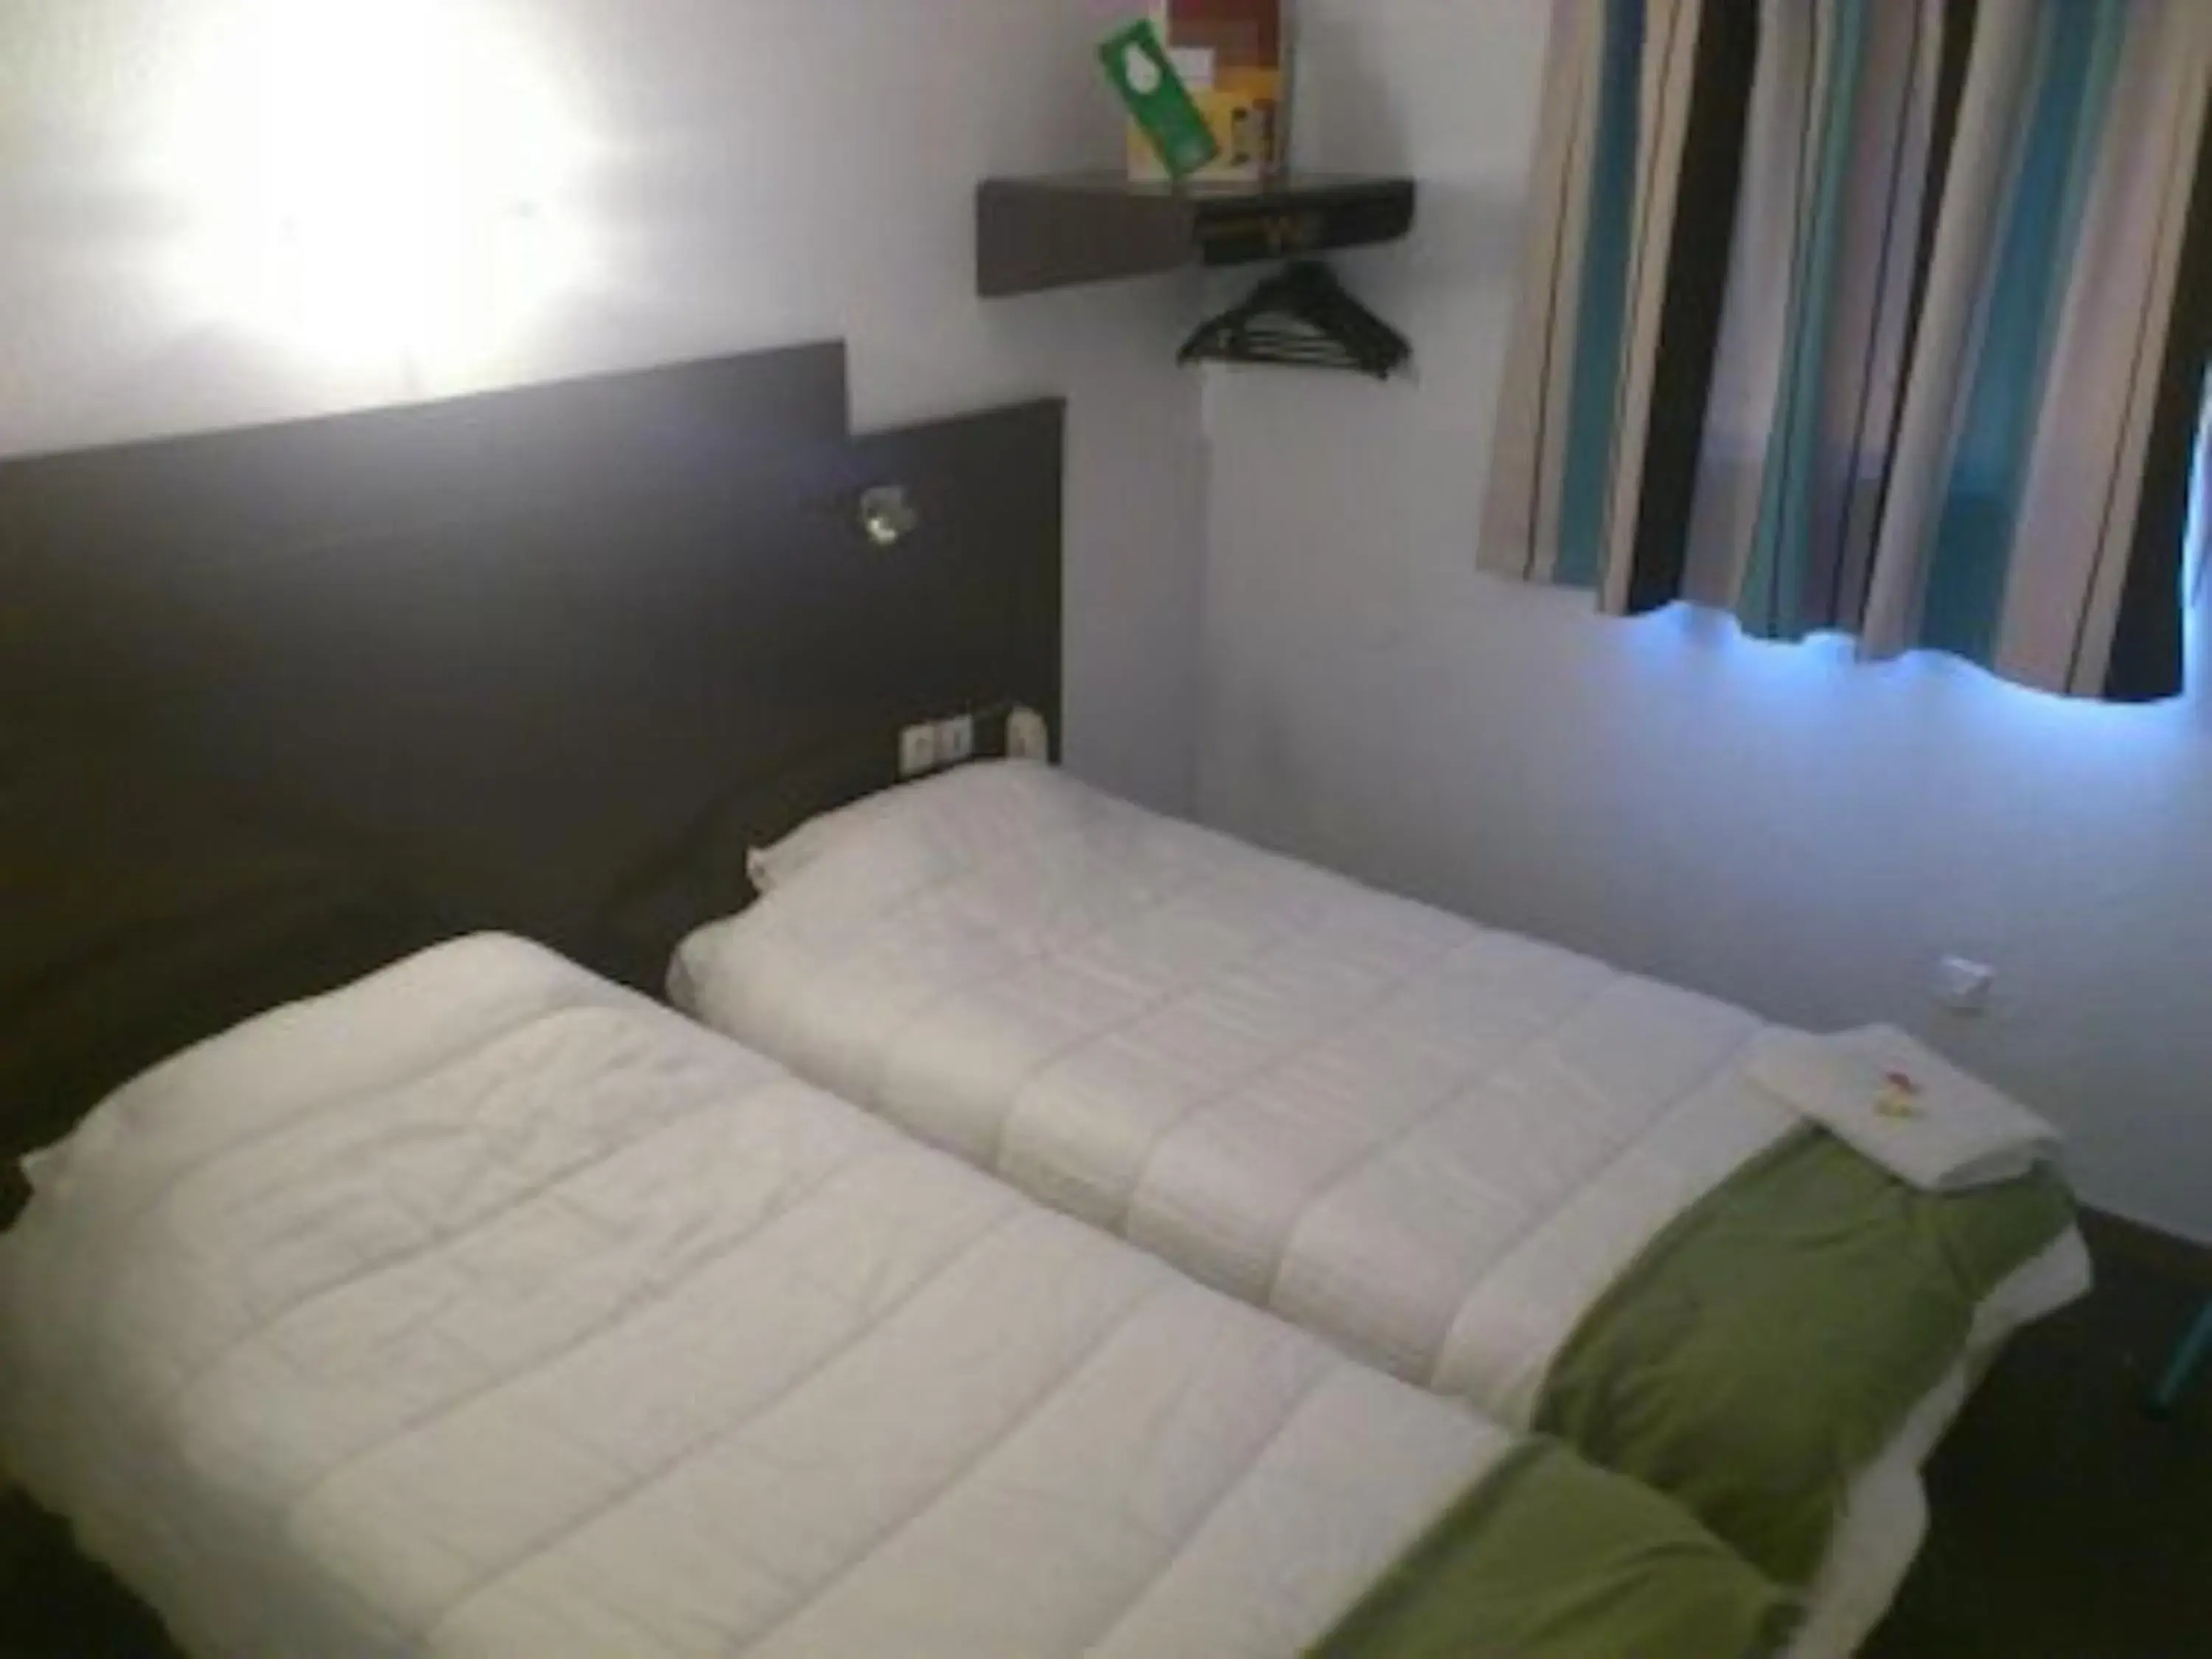 Bed, Room Photo in The Originals Access, Hotel Beziers Est (P'tit Dej-Hotel)